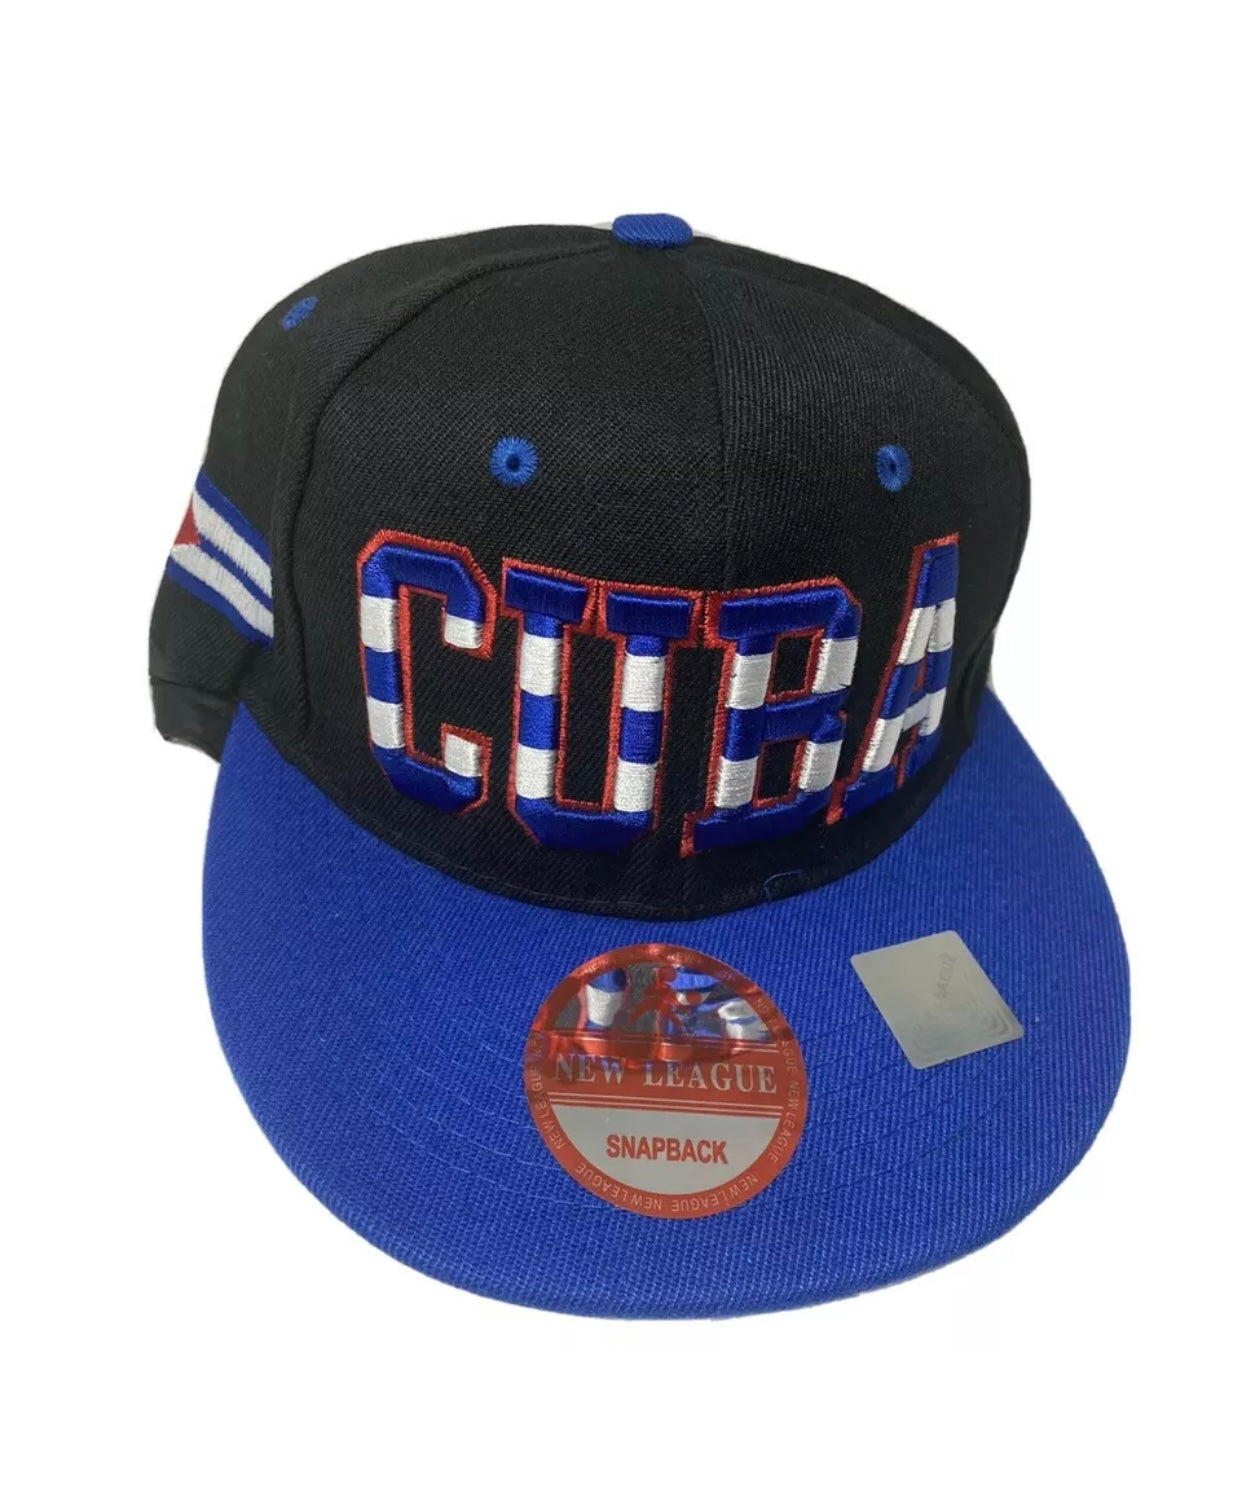 New York Cubans Hats: Black Strapback Dad Hat